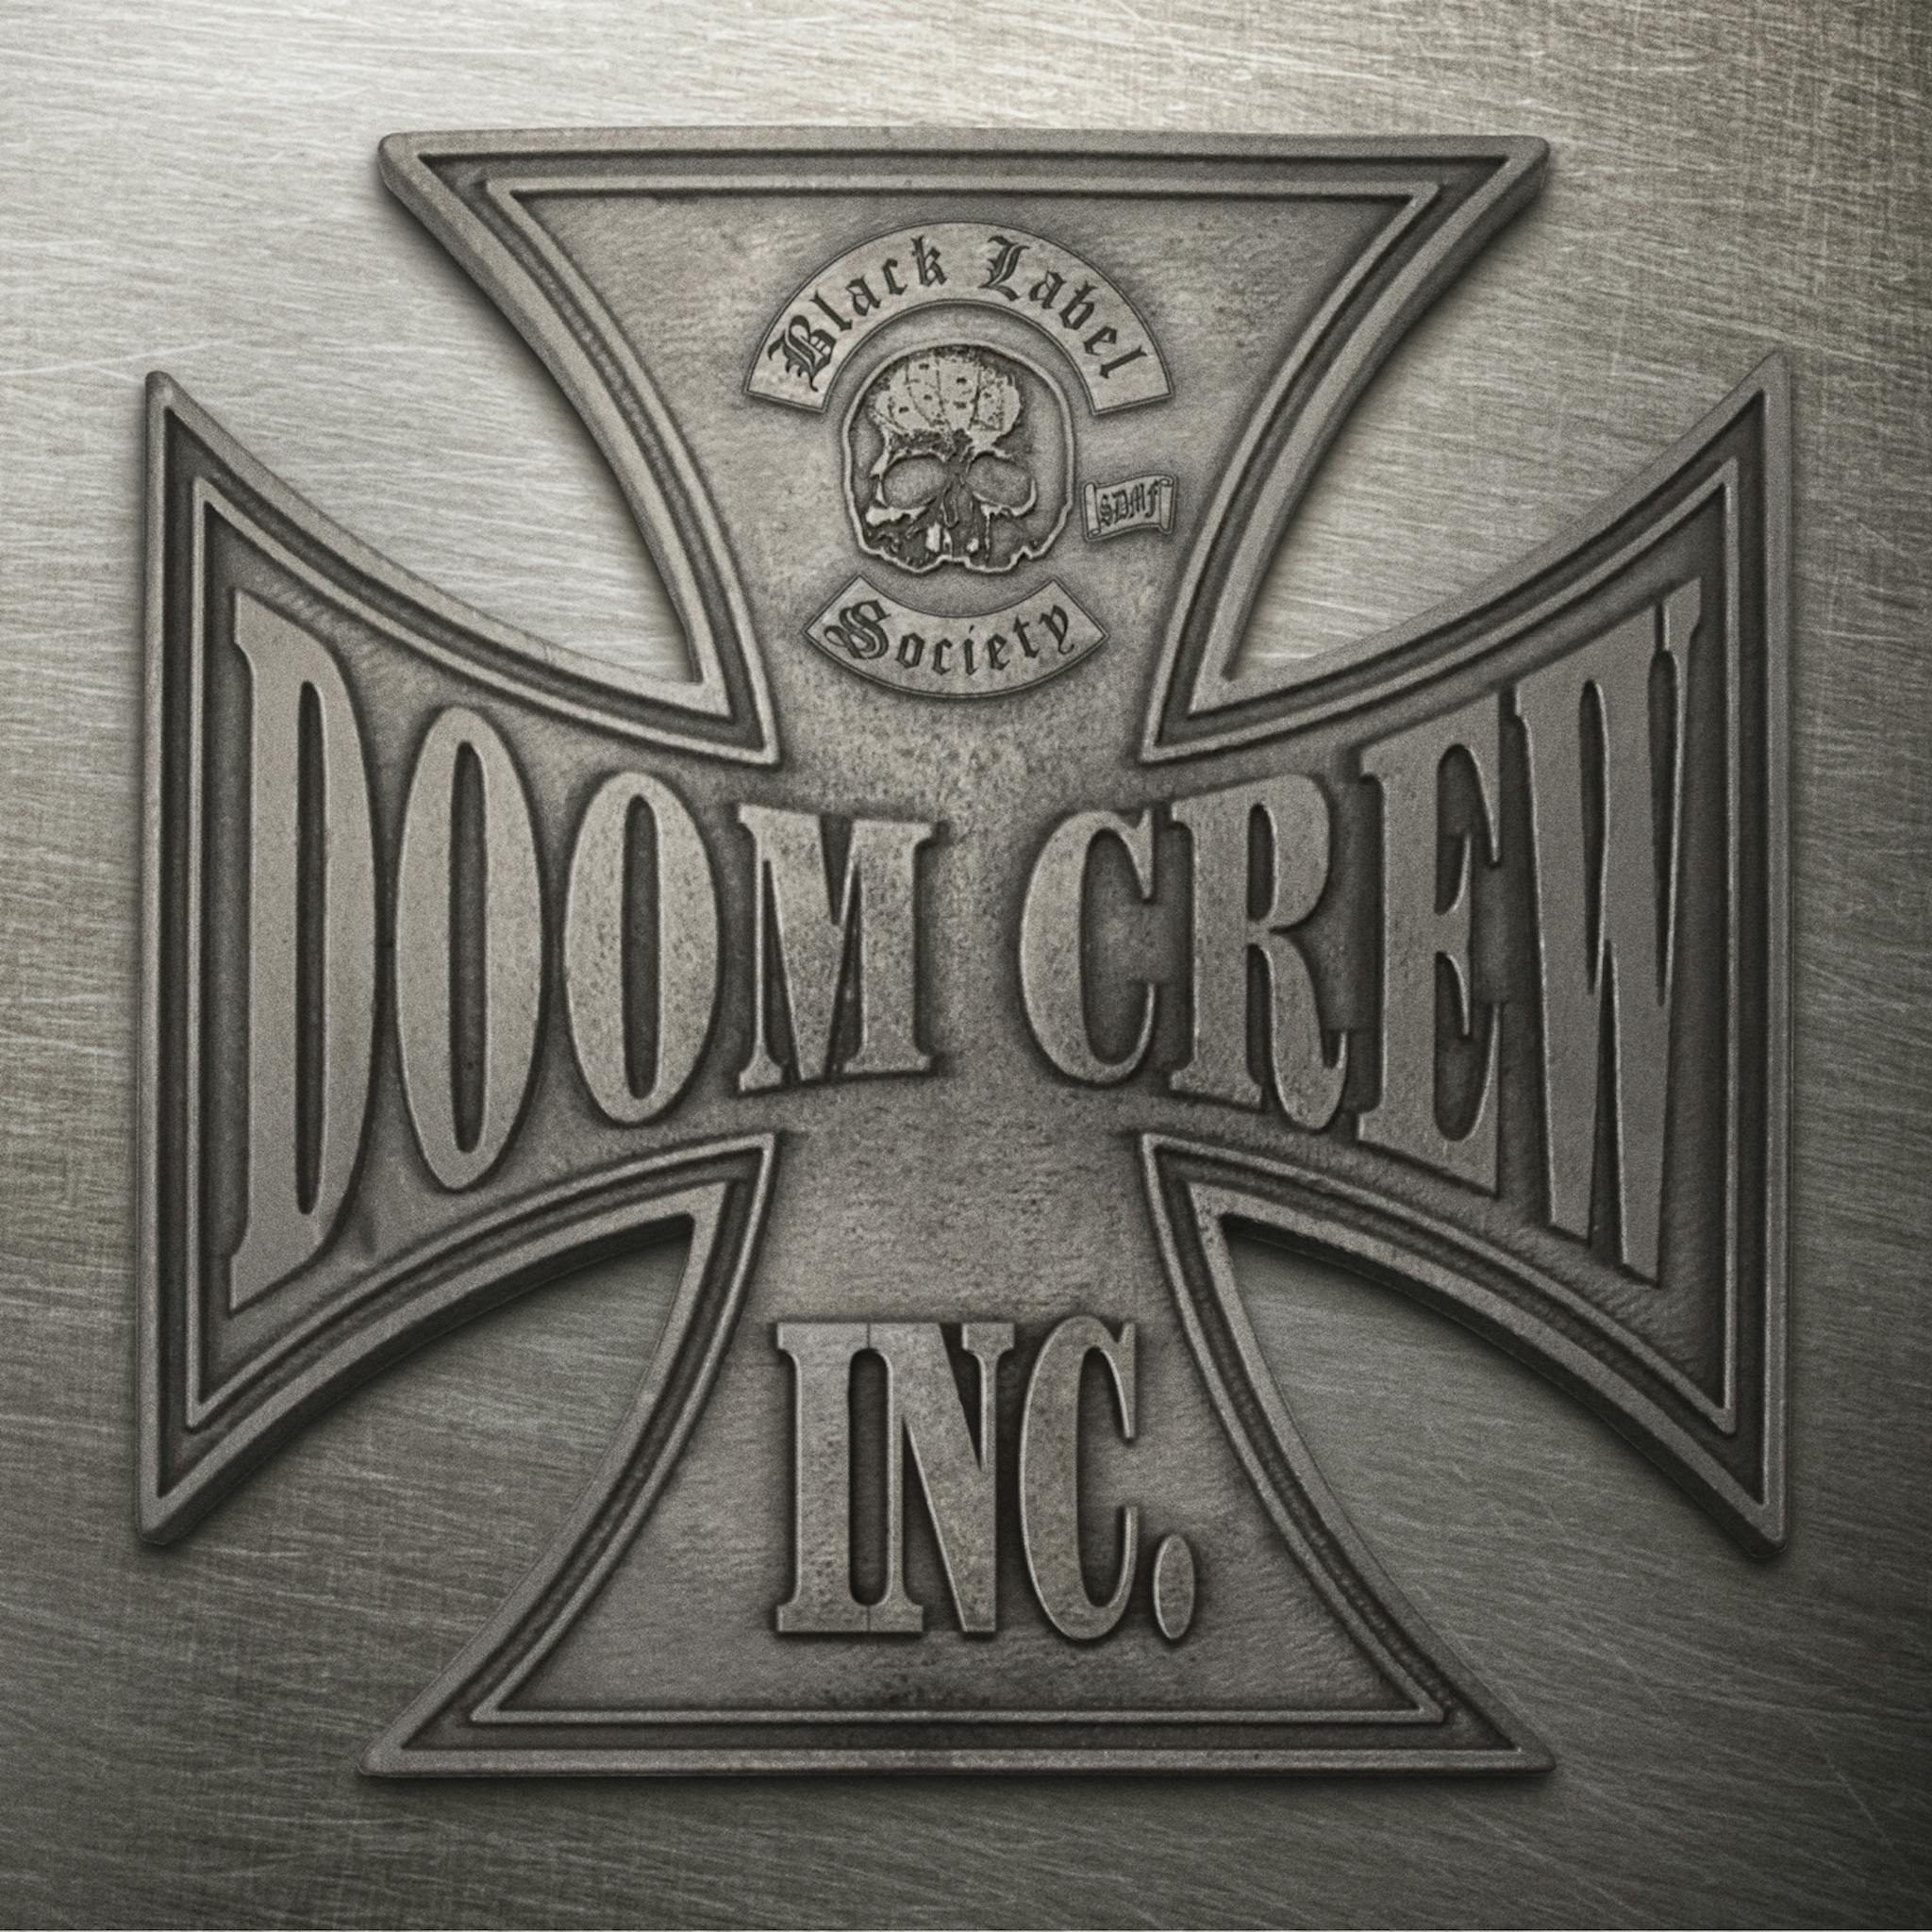 Black Label Society Doom Crew Inc artwork